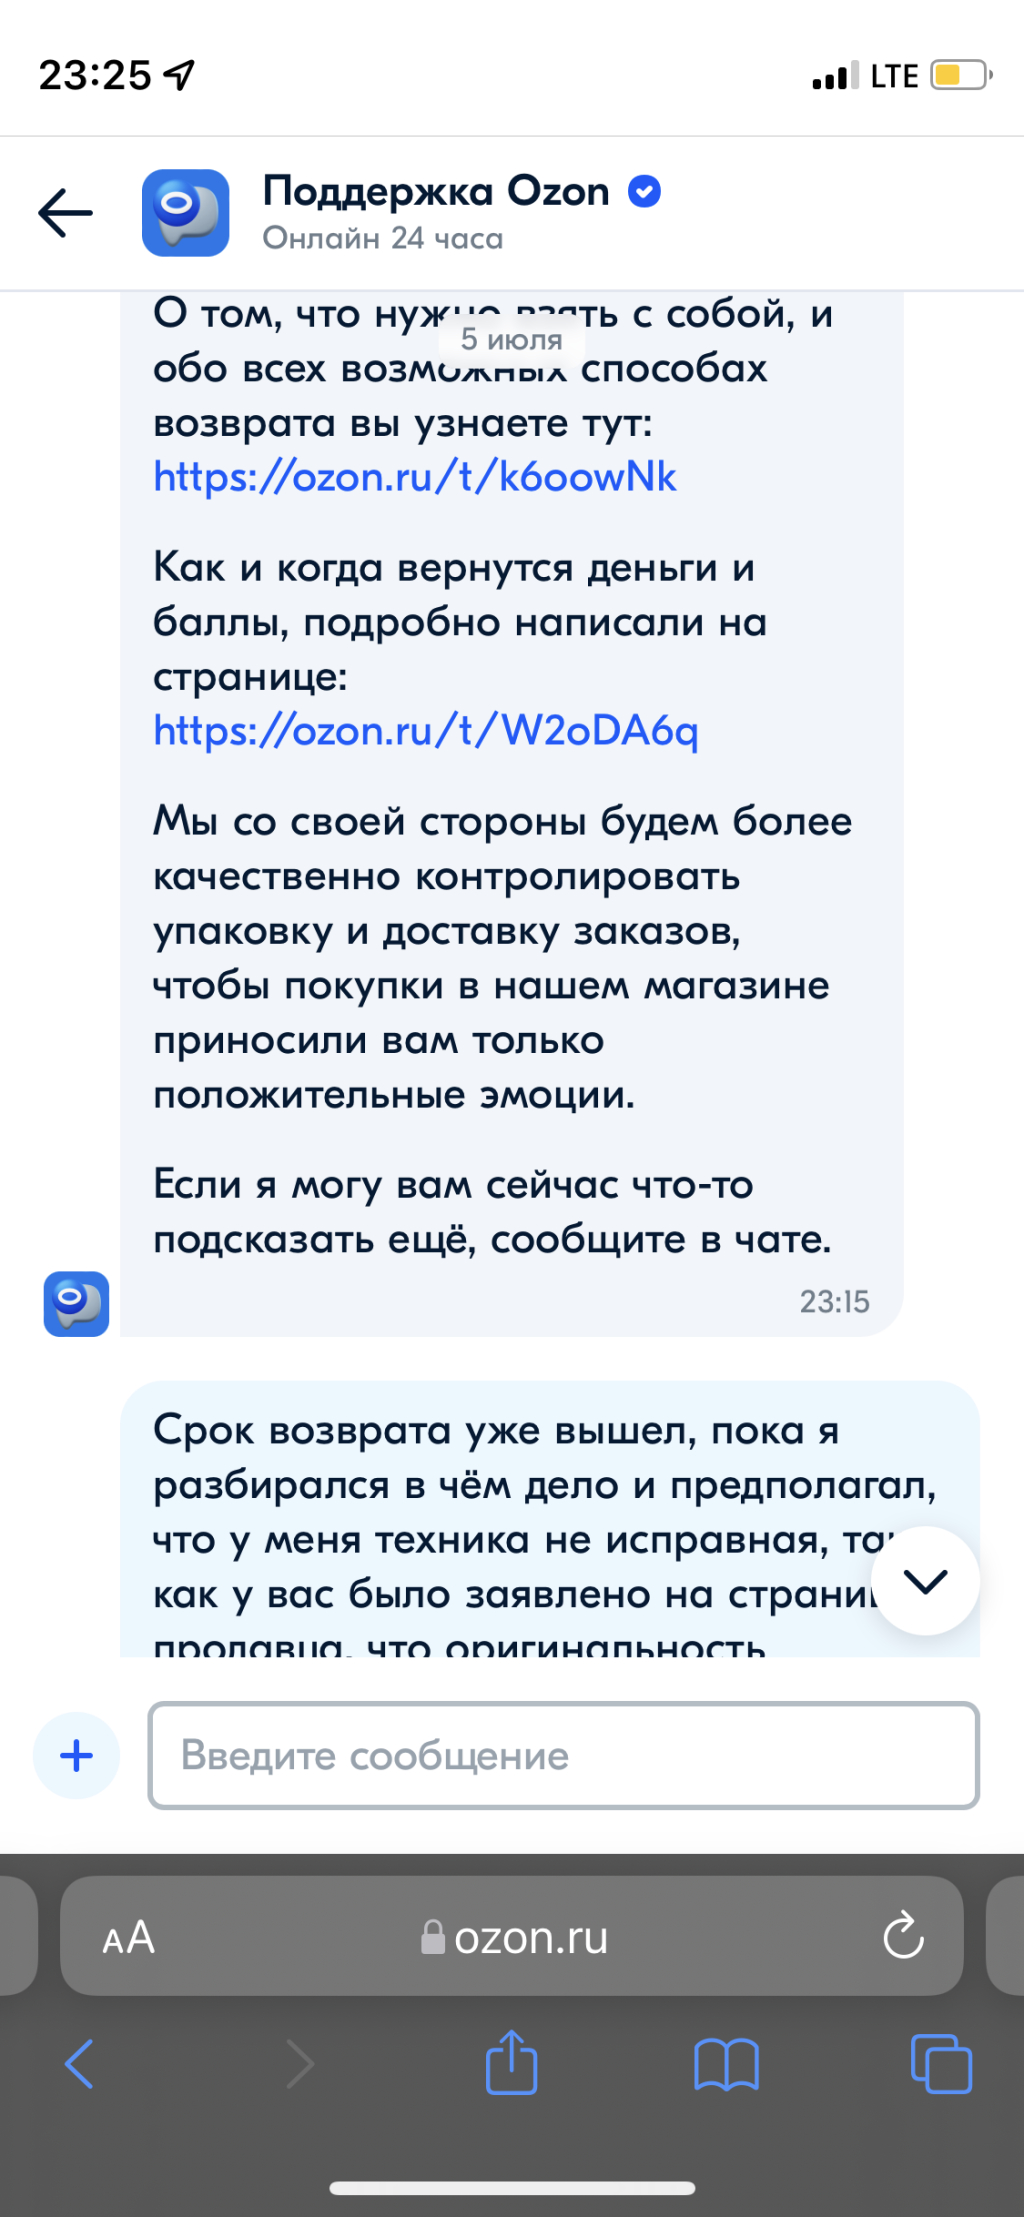 OZON.ru - Торгуют подделками